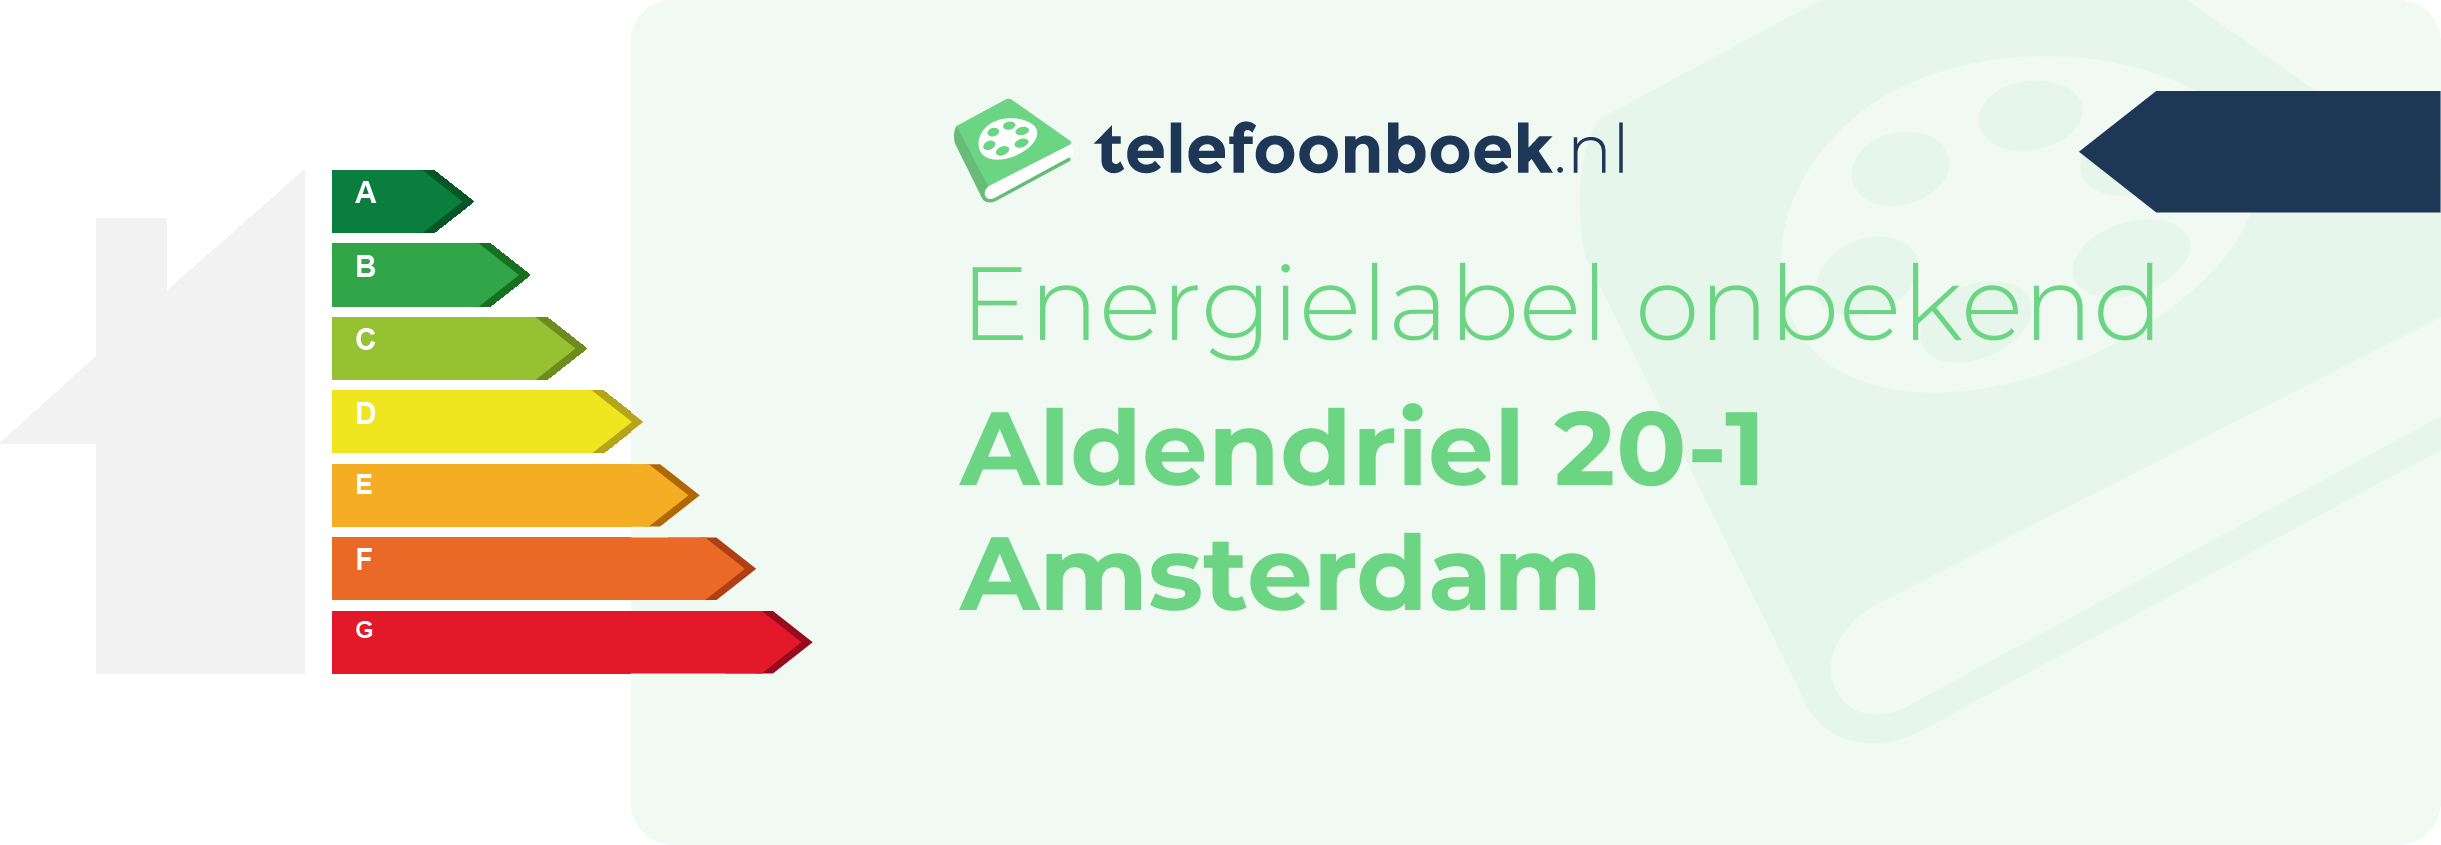 Energielabel Aldendriel 20-1 Amsterdam